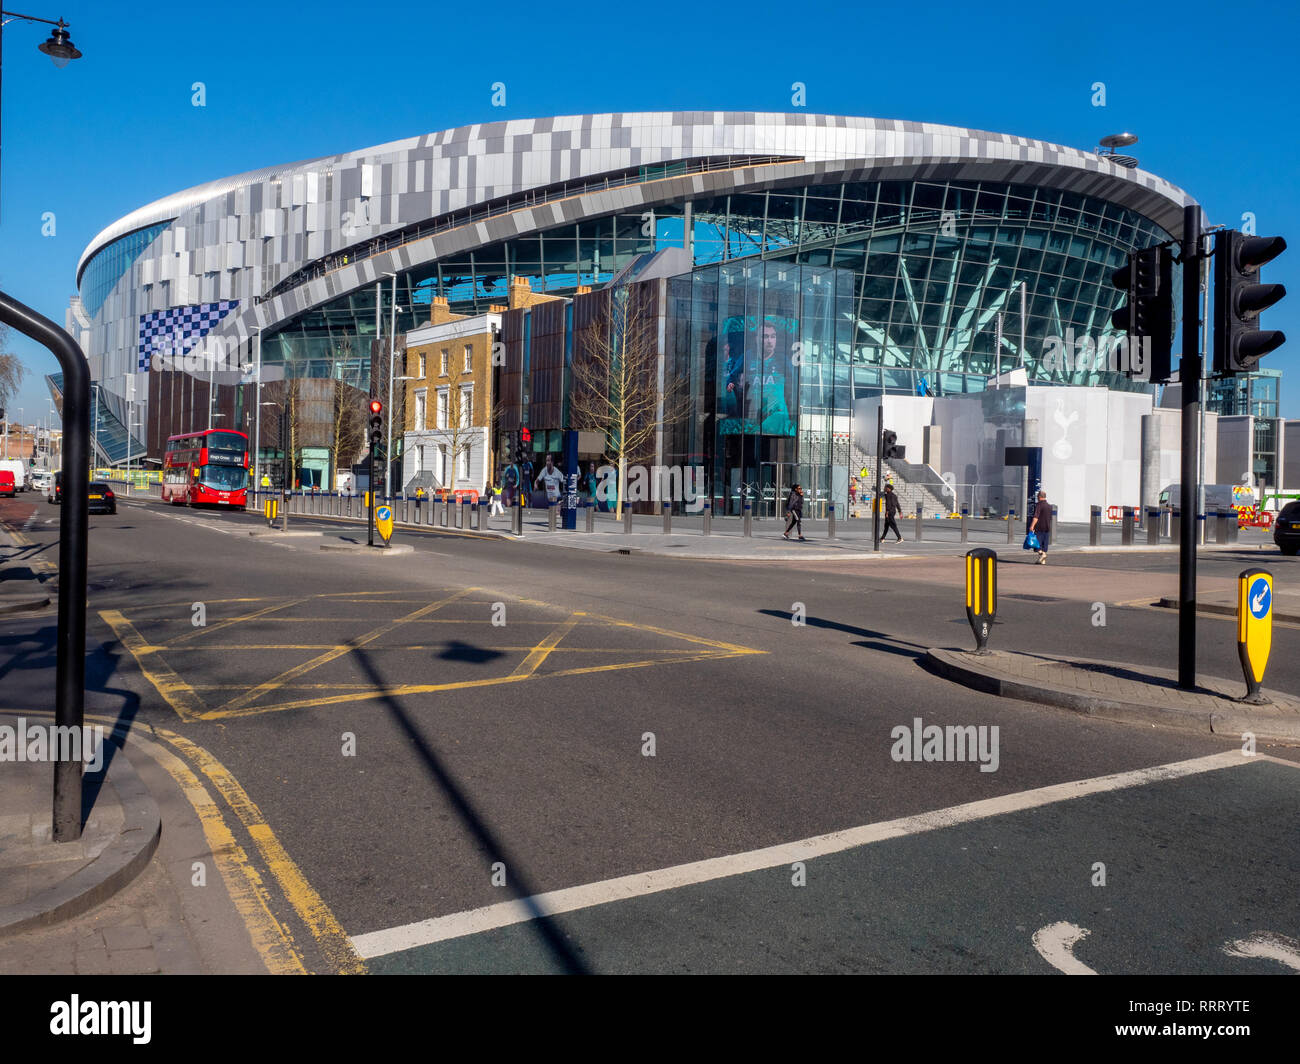 The new Tottenham Hotspur FC (Spurs) stadium in the north London suburb. Stock Photo